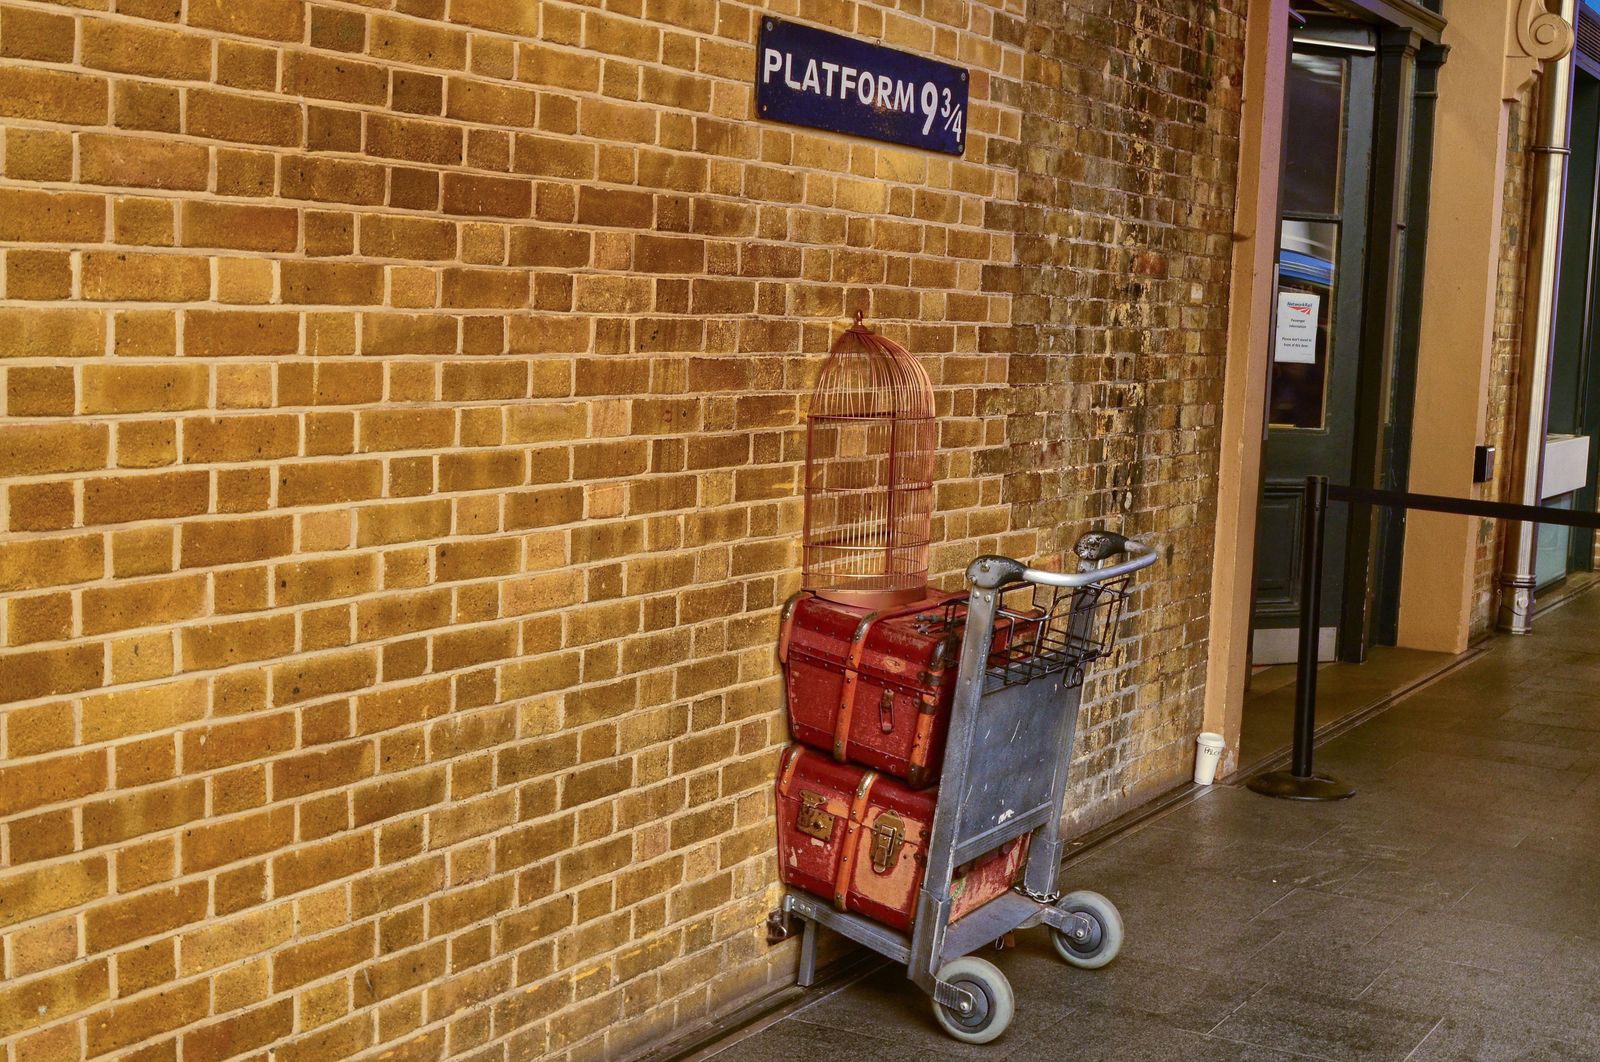 Harry boards the Hogwarts Express at Platform 9 ¾ scene in Harry Potter